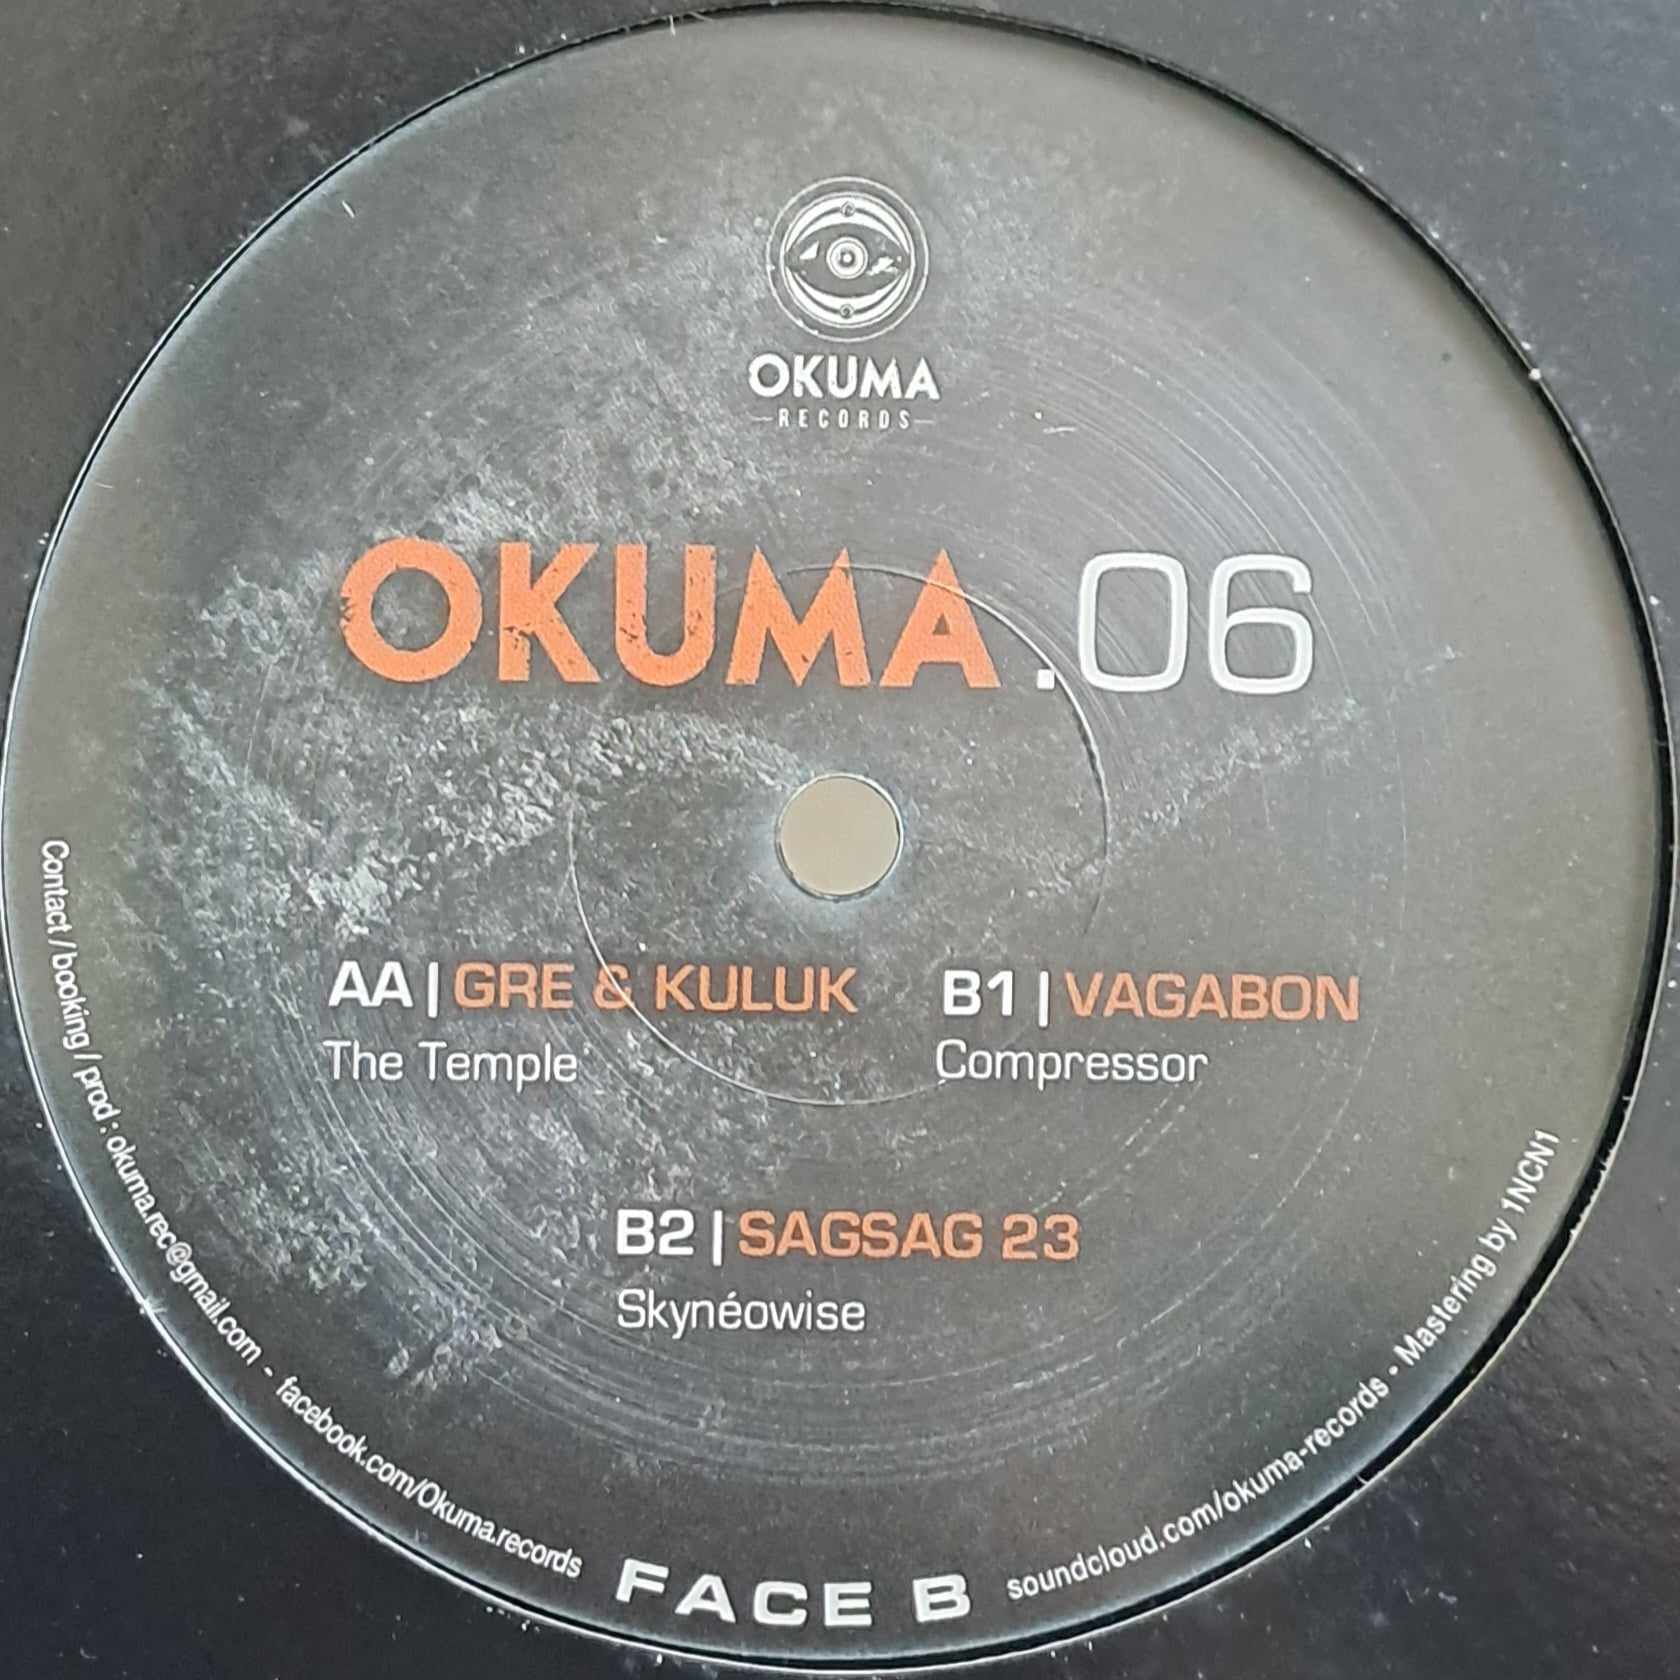 Okuma 06 - vinyle freetekno